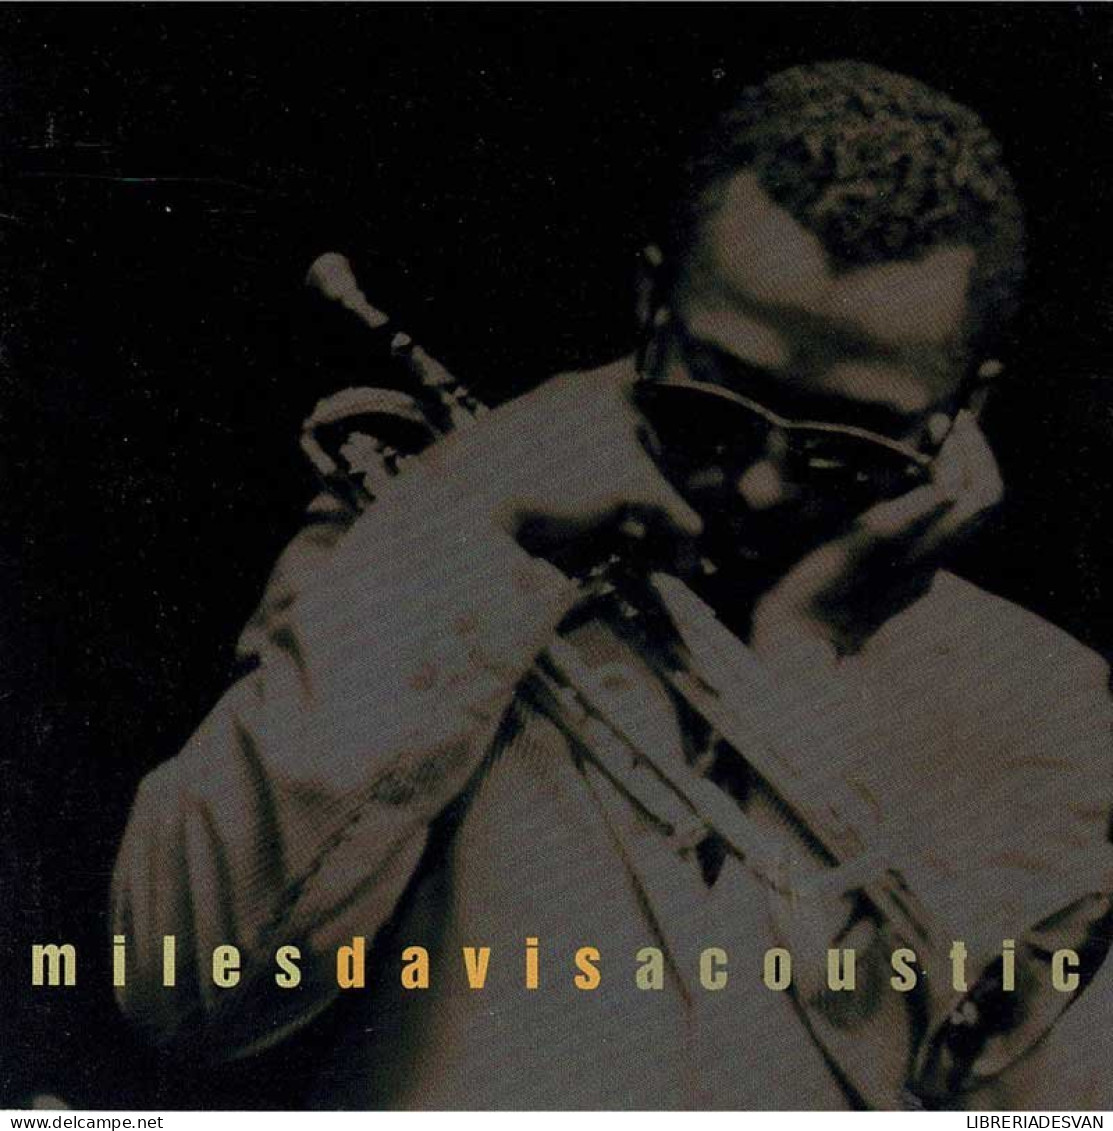 Miles Davis - This Is Jazz 8. CD - Jazz